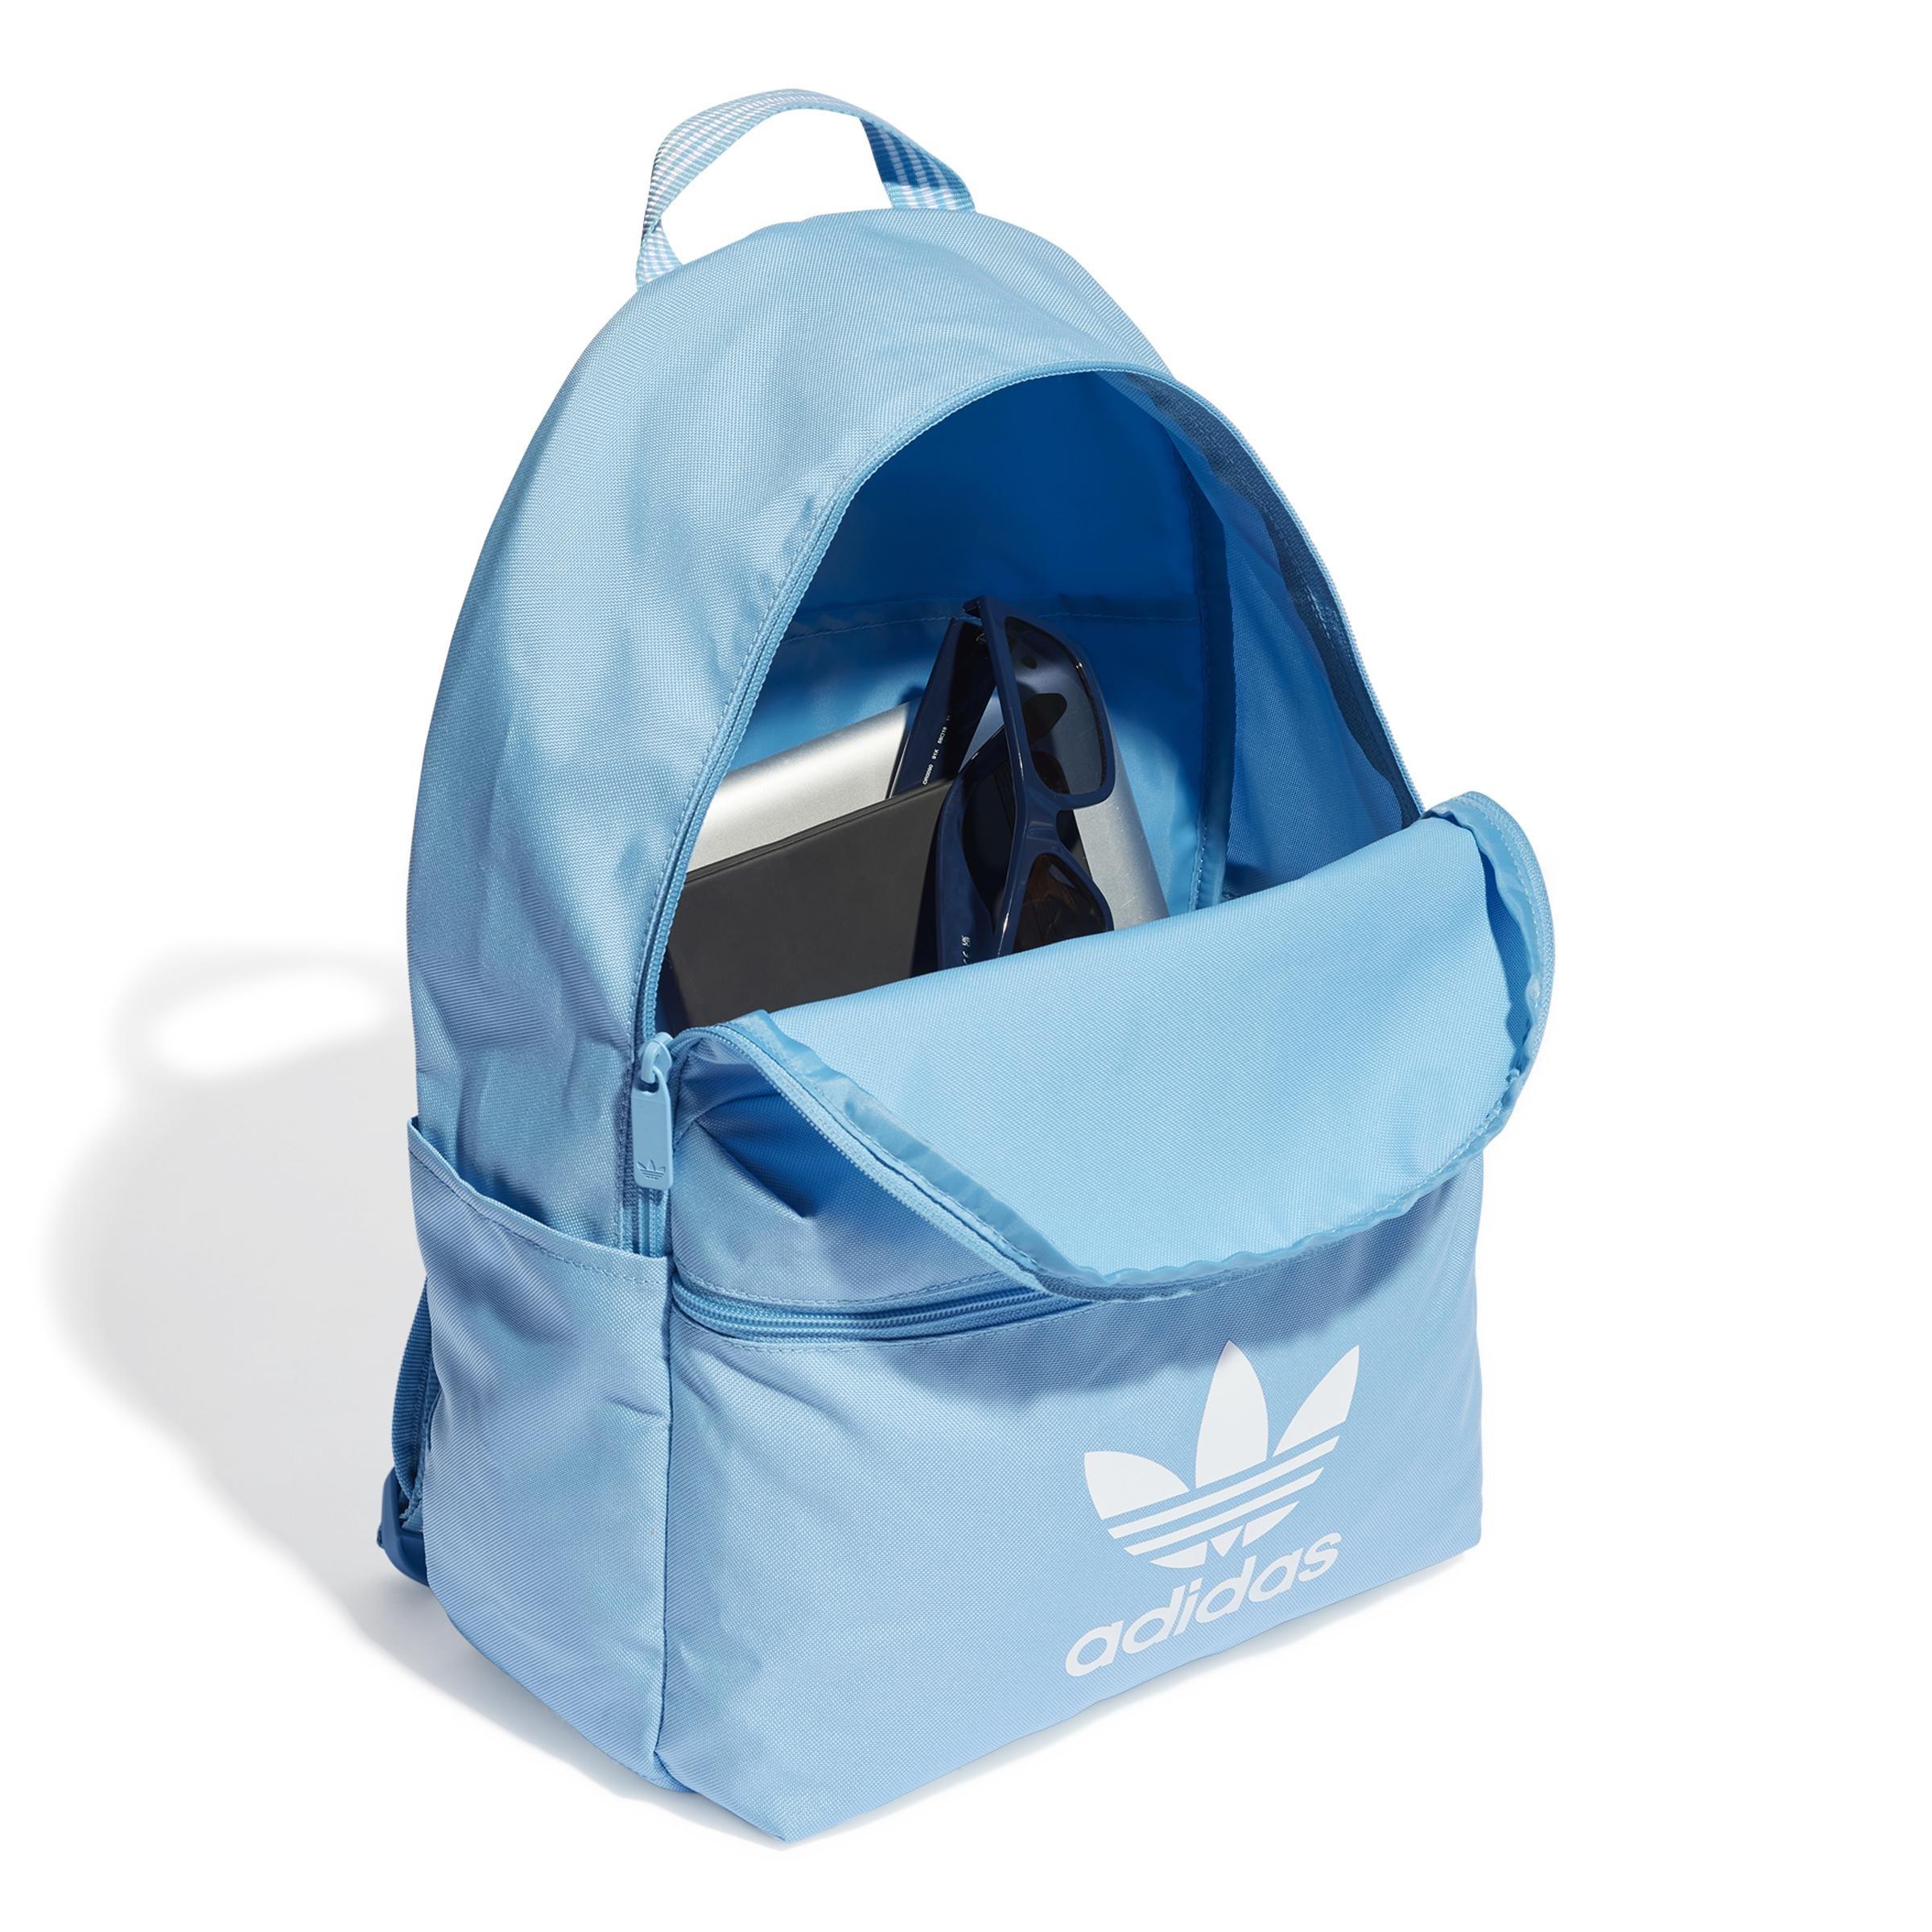 adidas - Unisex Adicolor Backpack, Blue